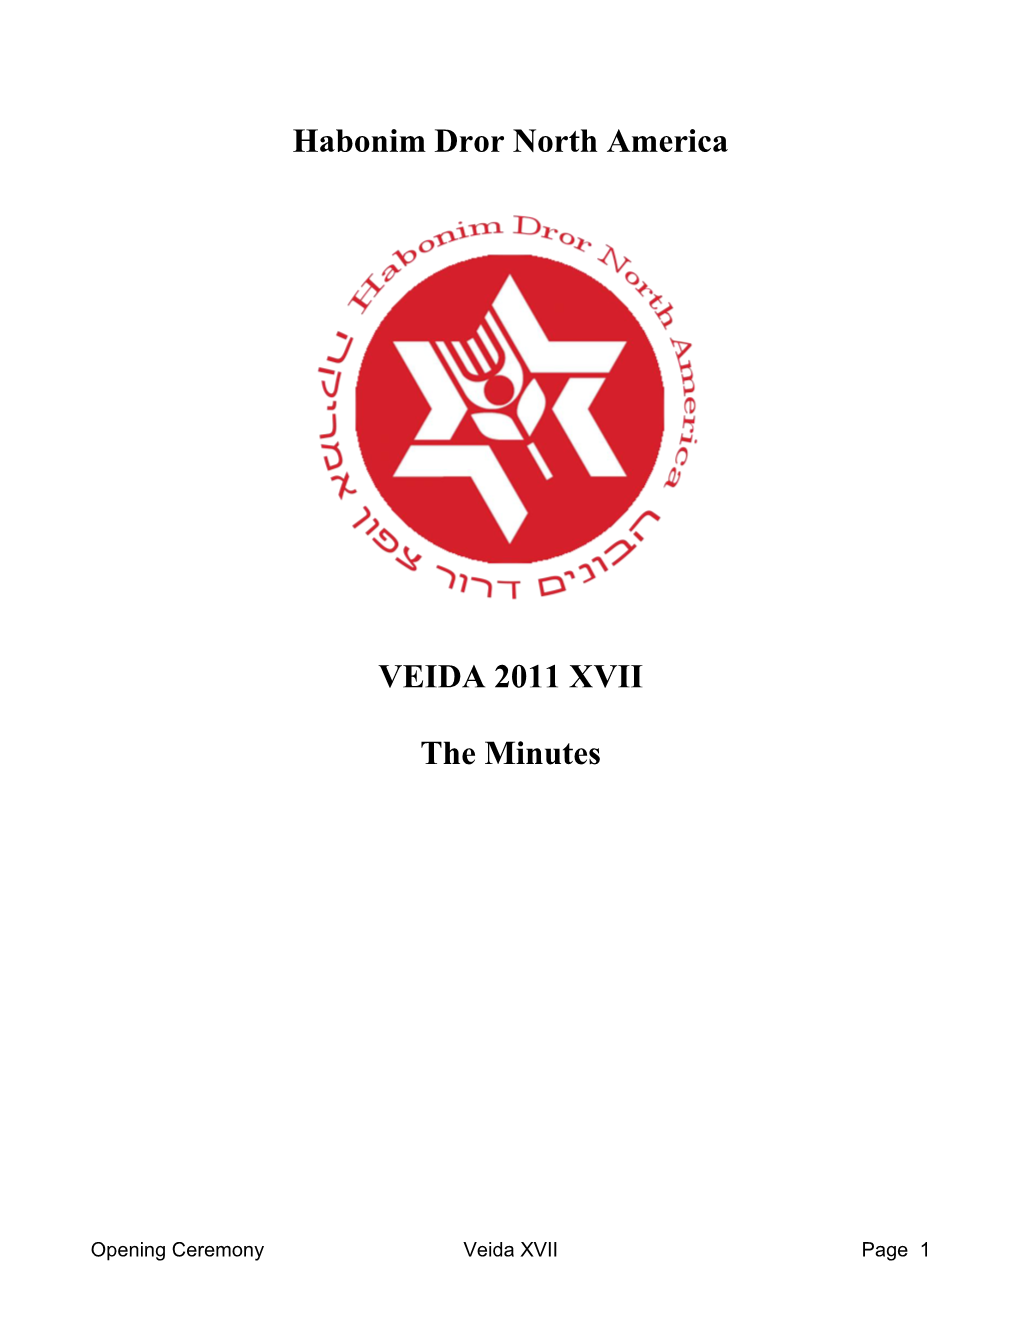 VEIDA XVII Minutes